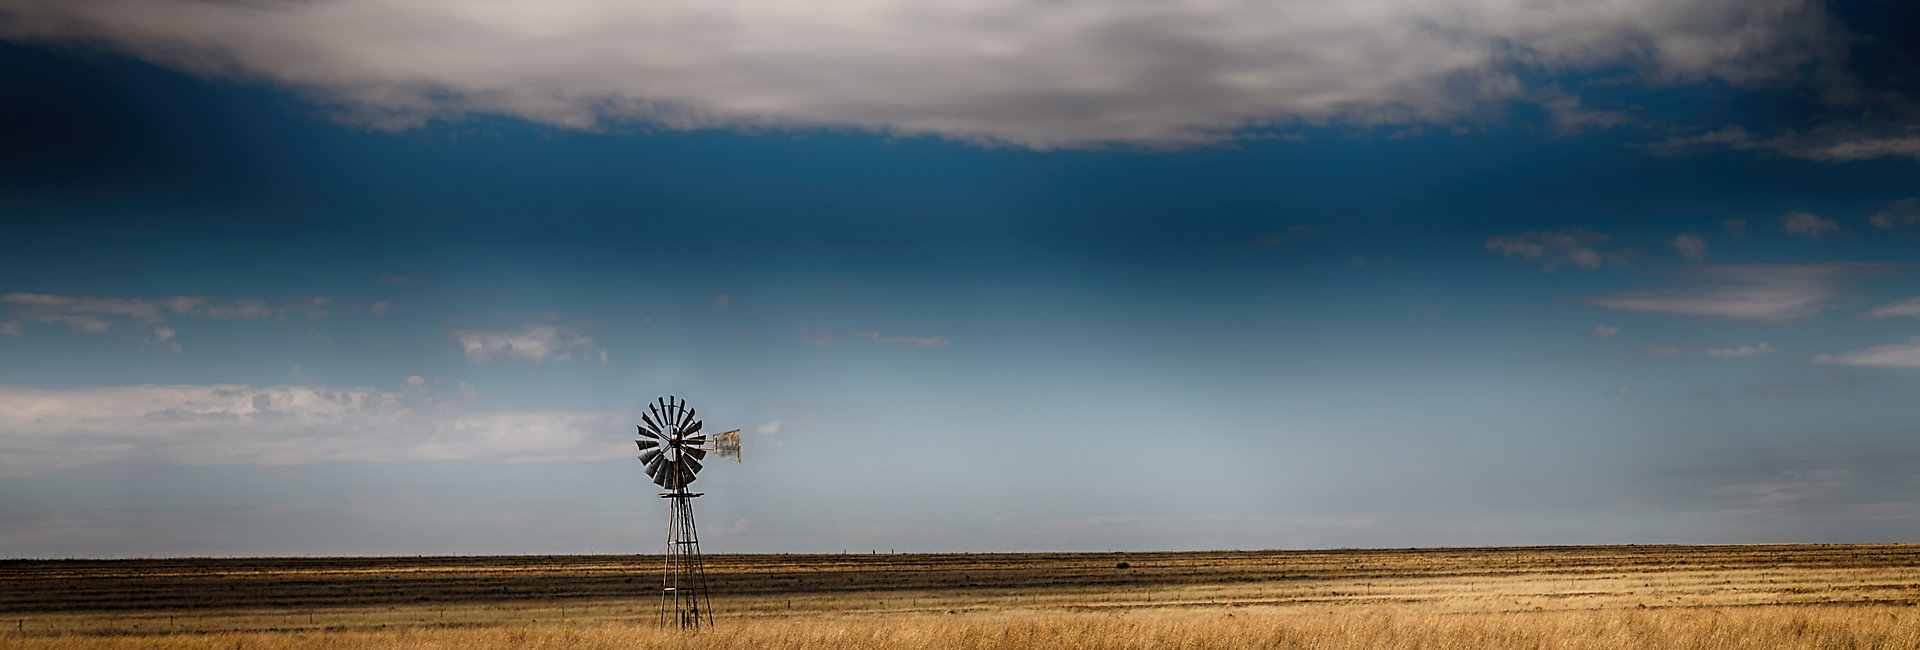 Metal windmill in field